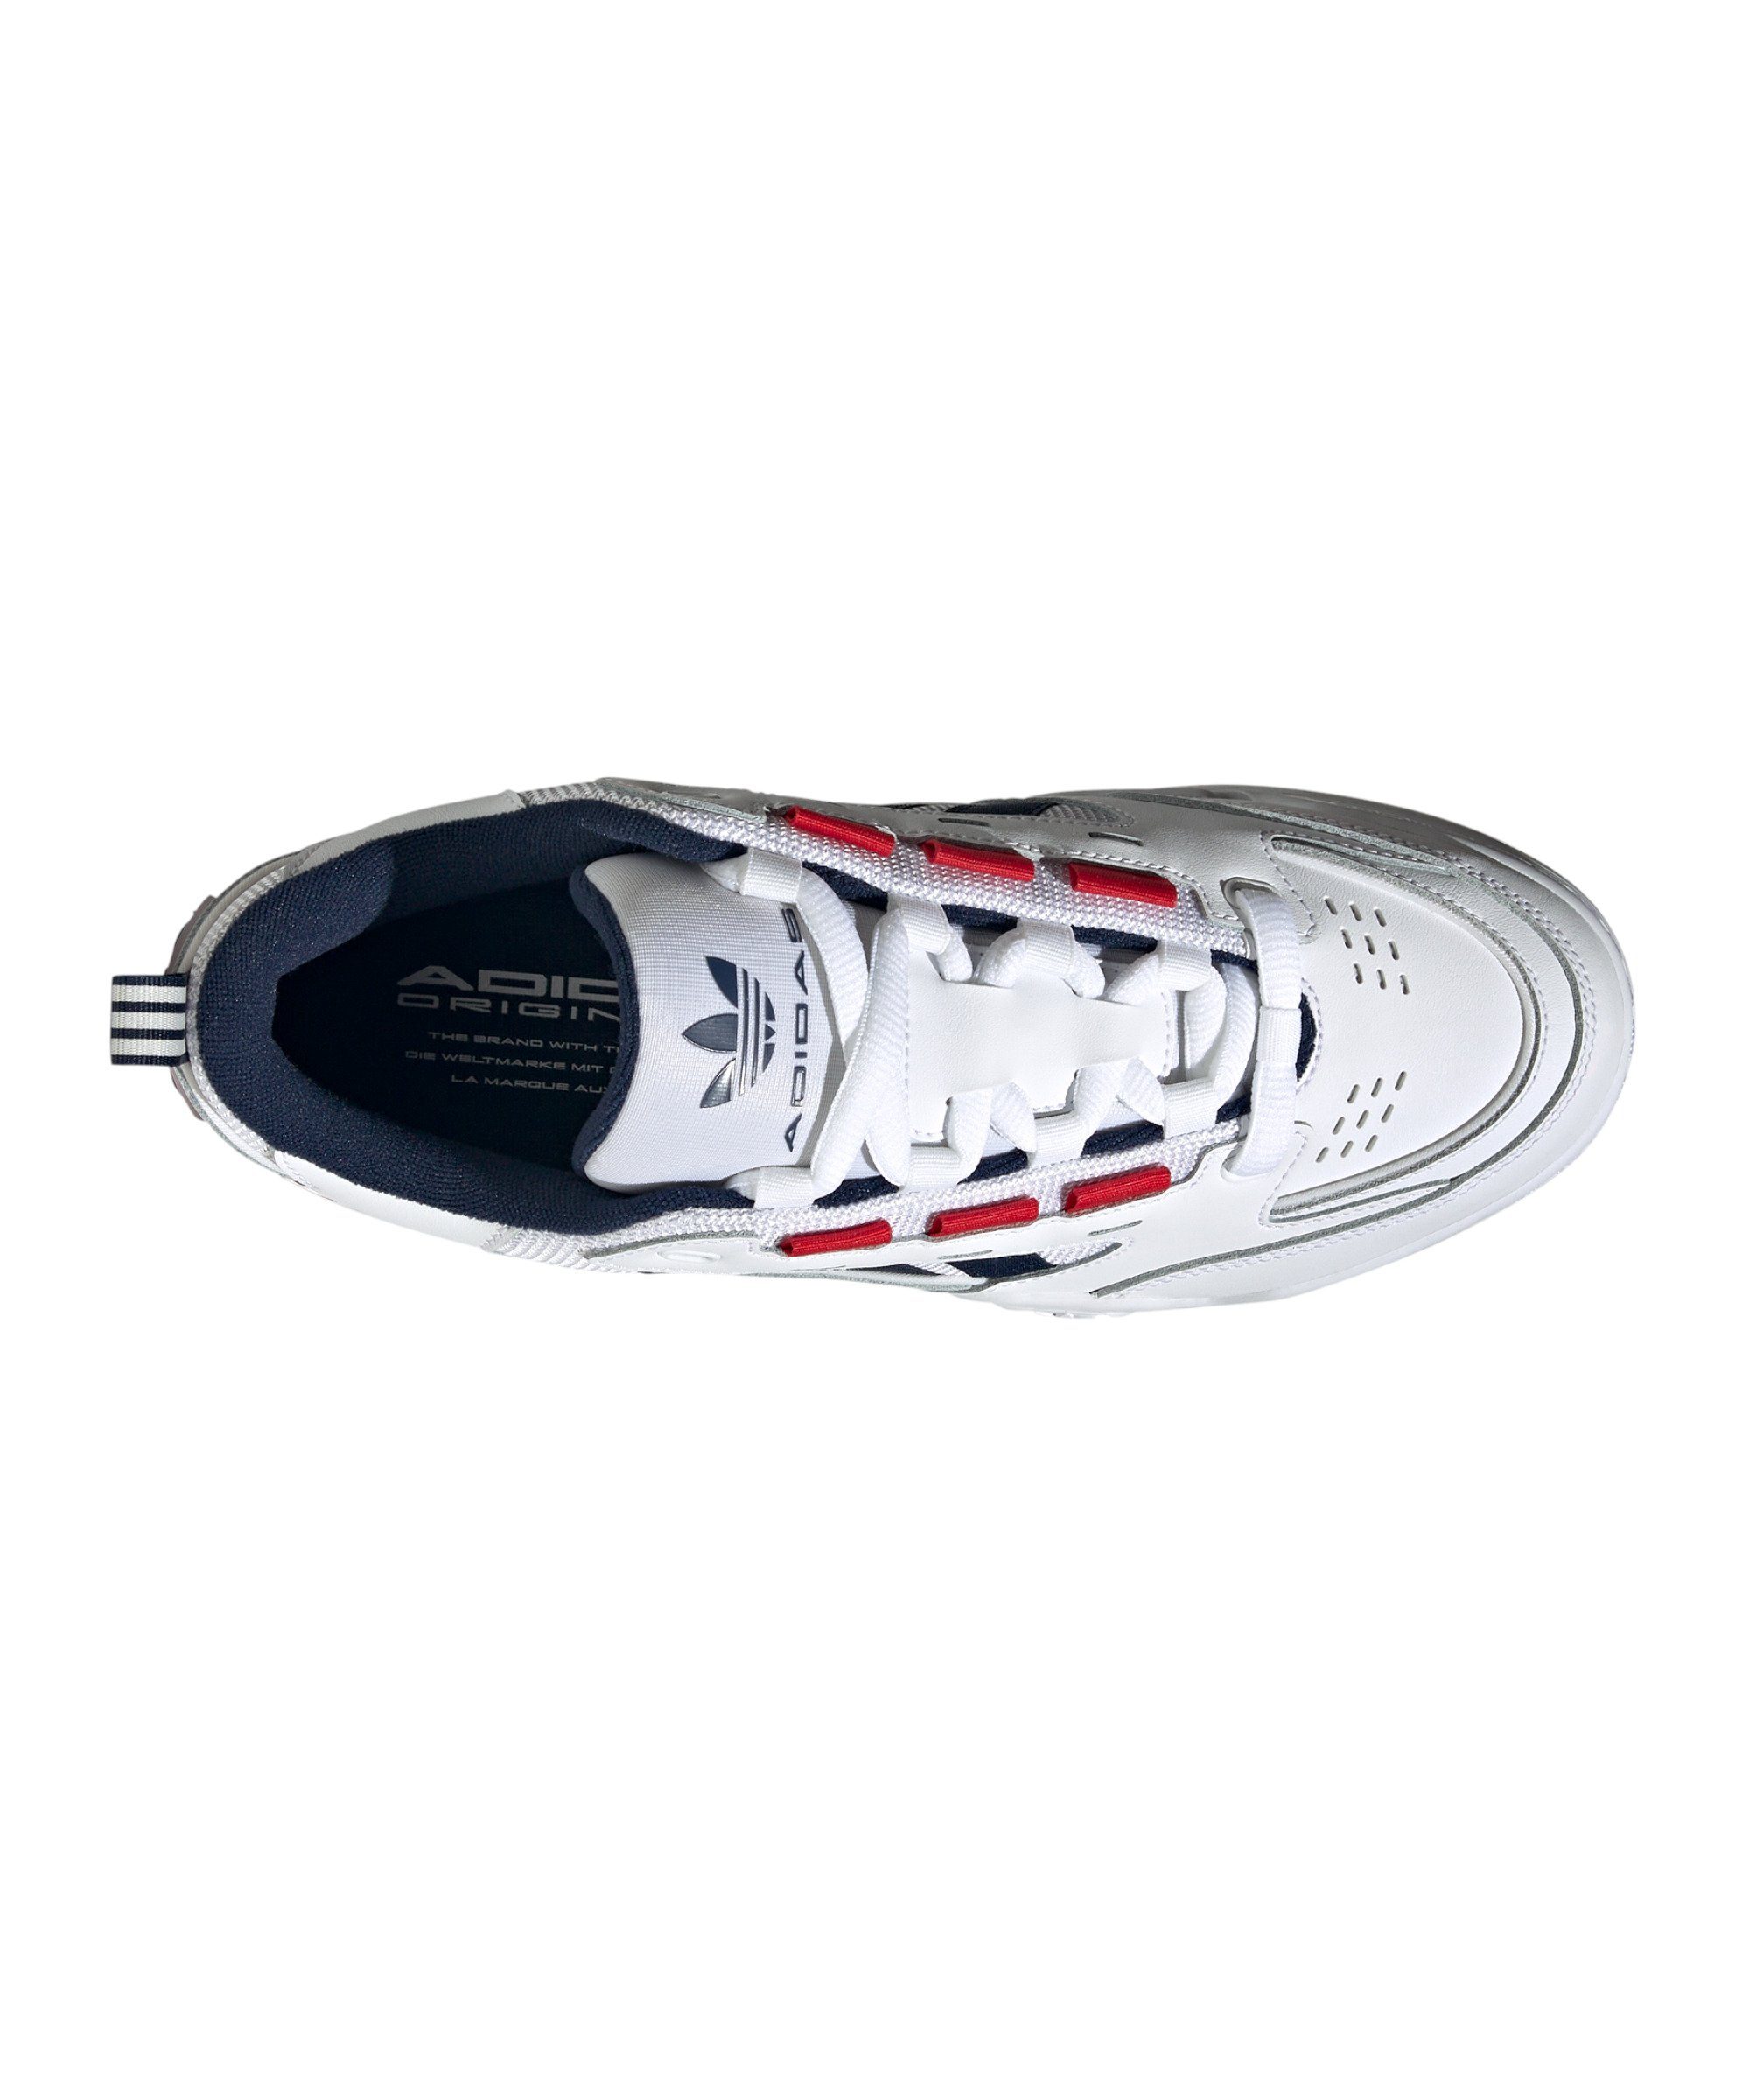 Originals Adi2000 adidas Sneaker weissblaurot